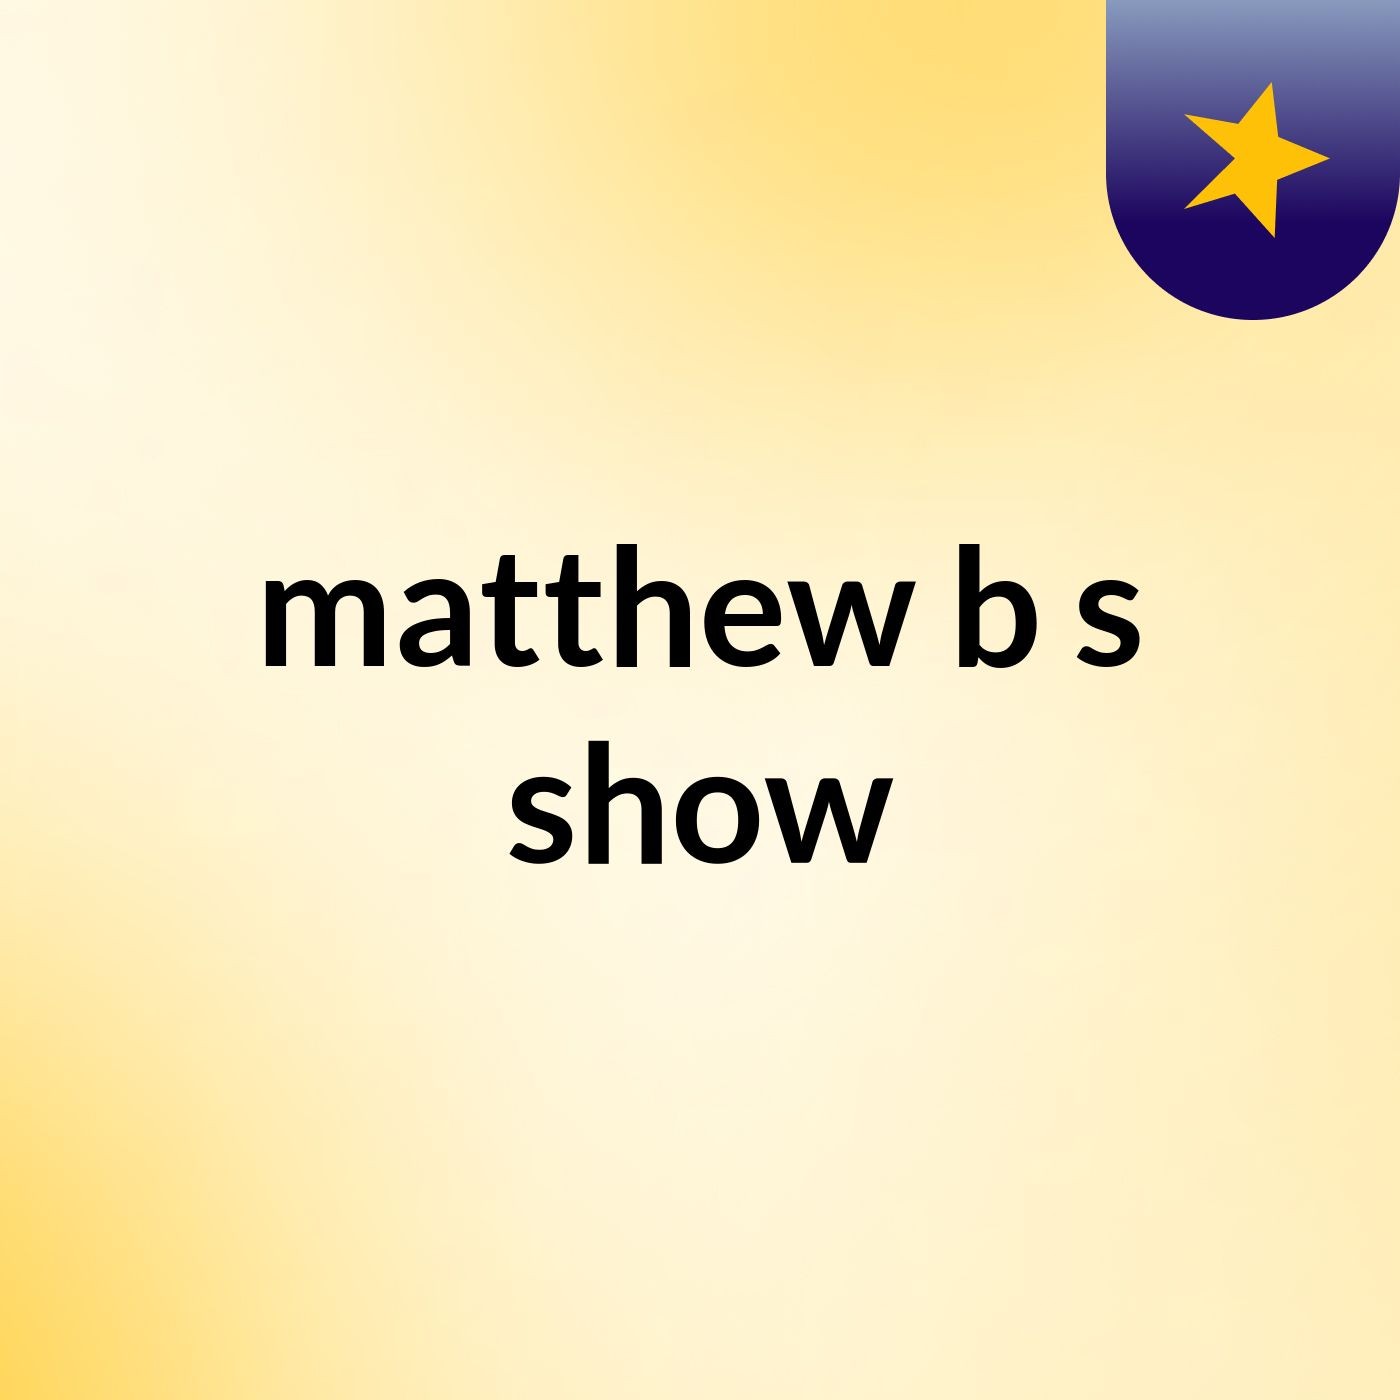 matthew b's show